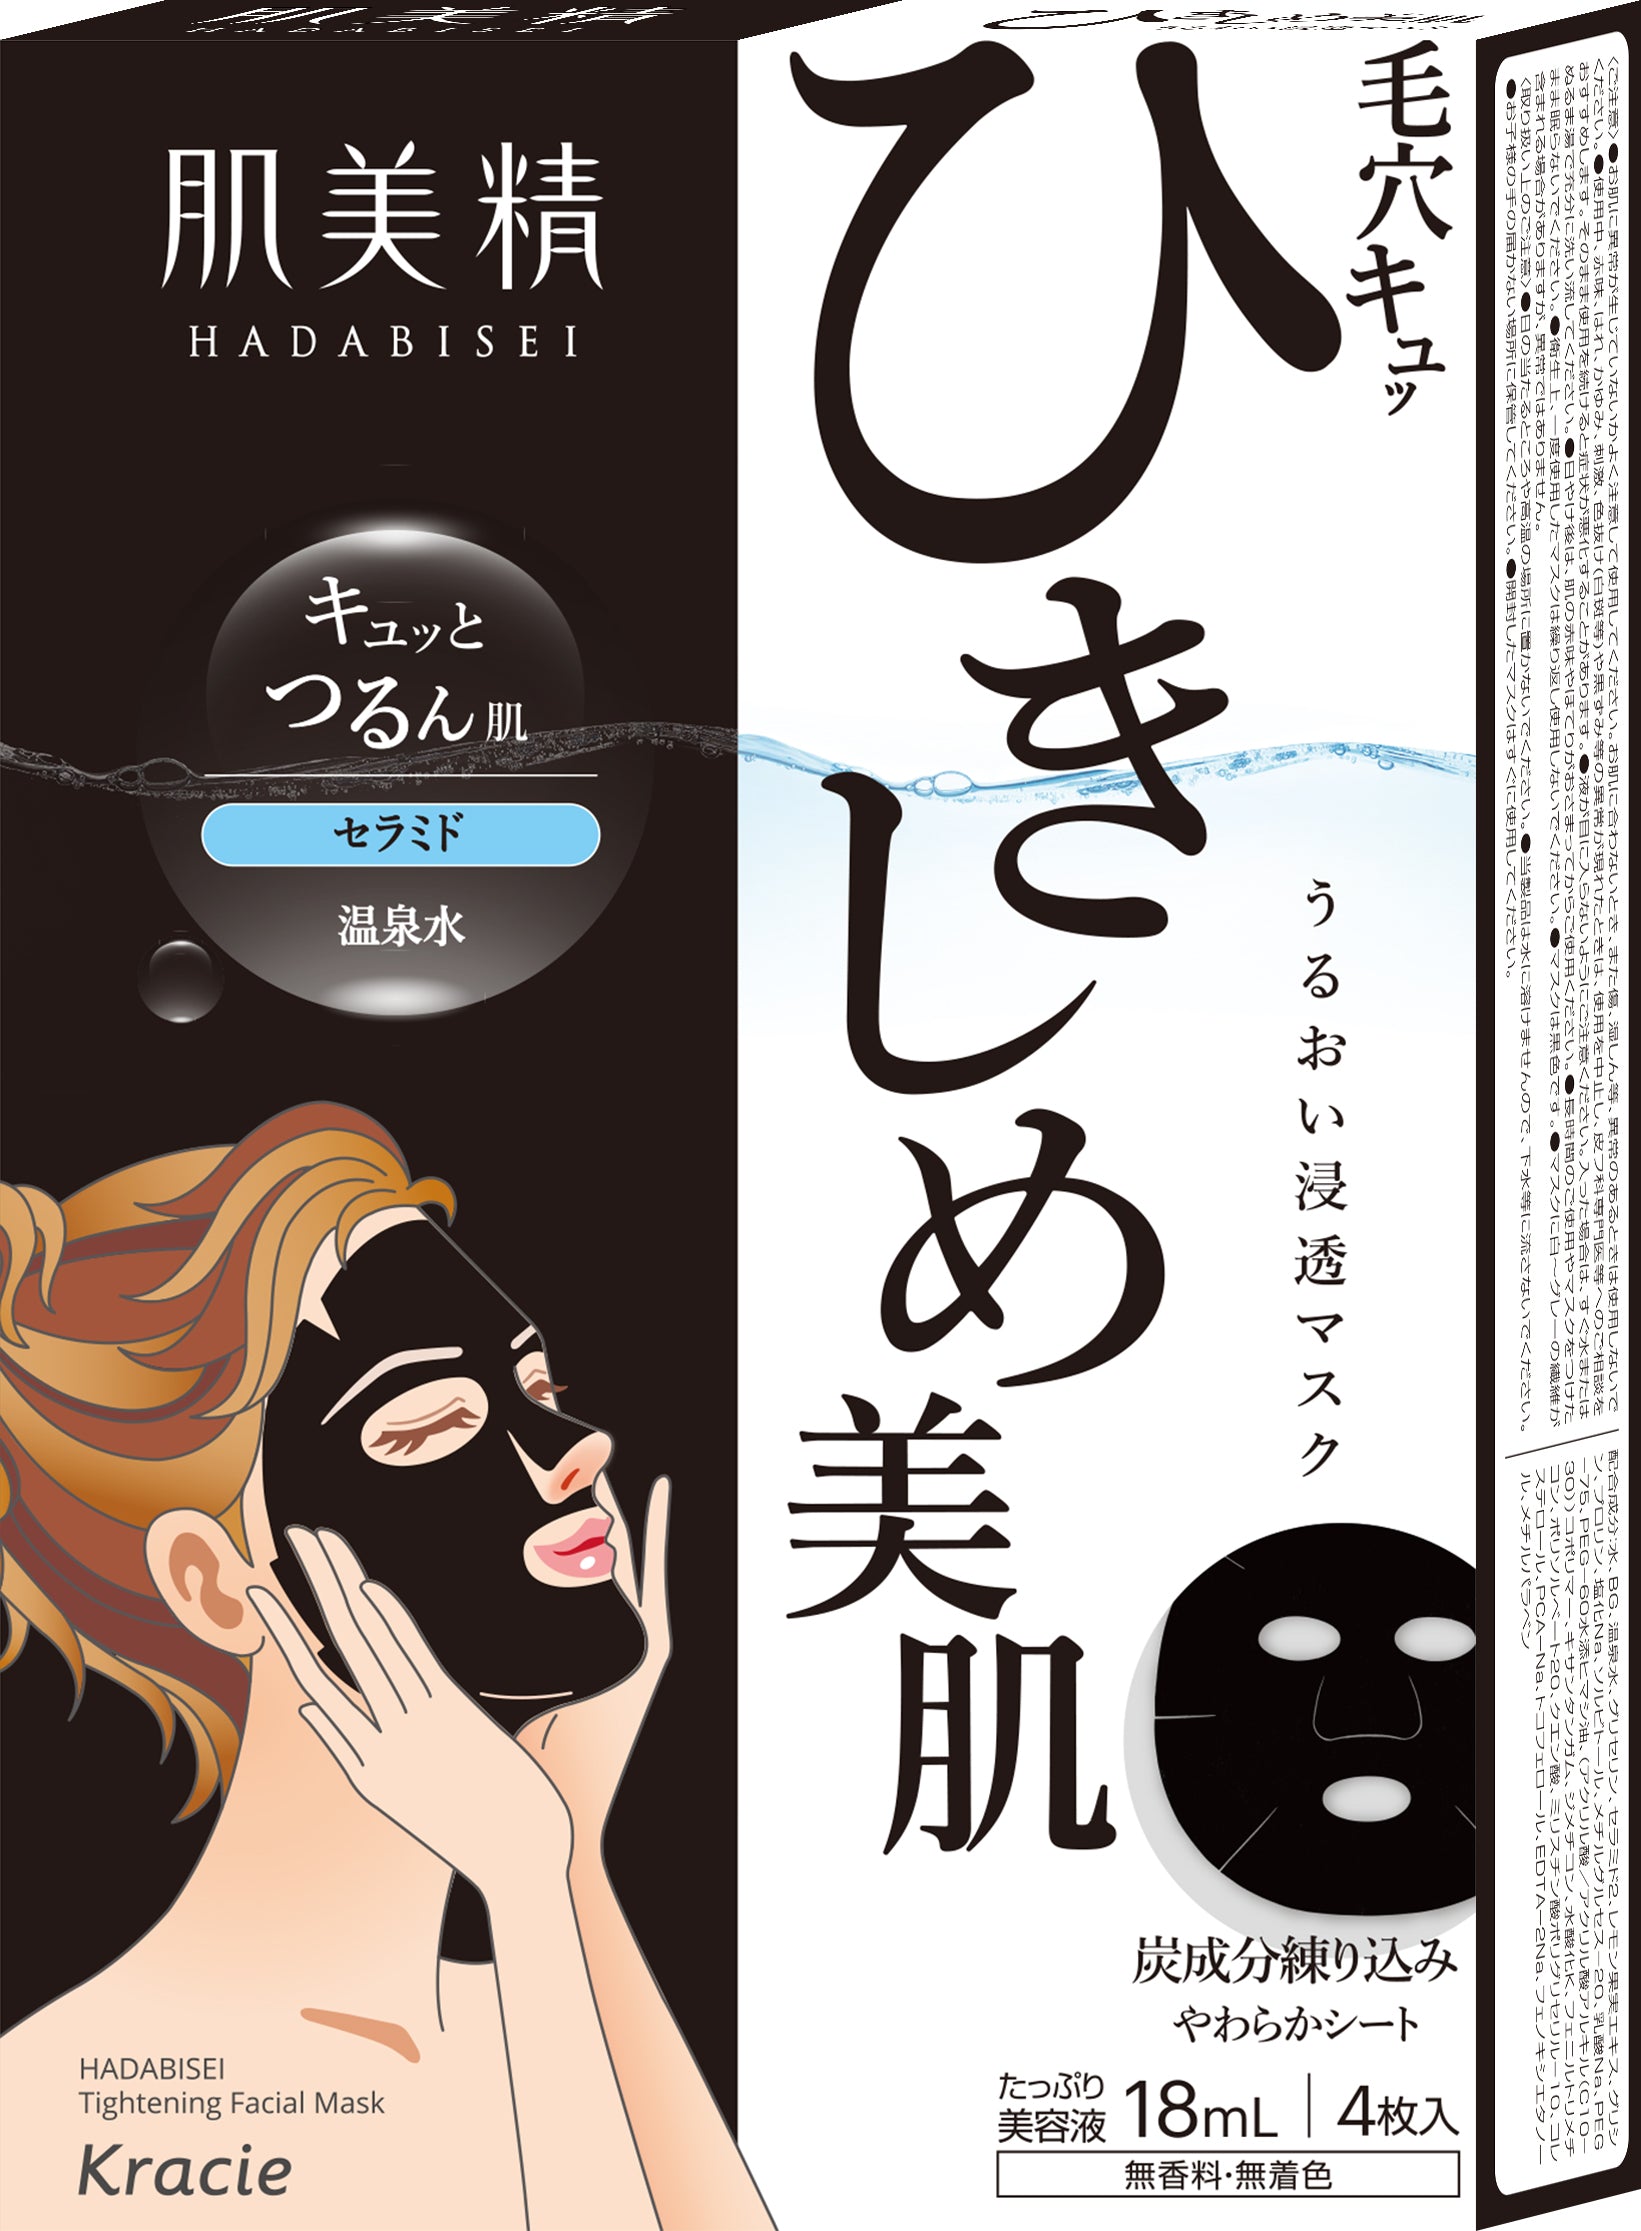 Kracie Hadabisei Short Expiry Face Masks